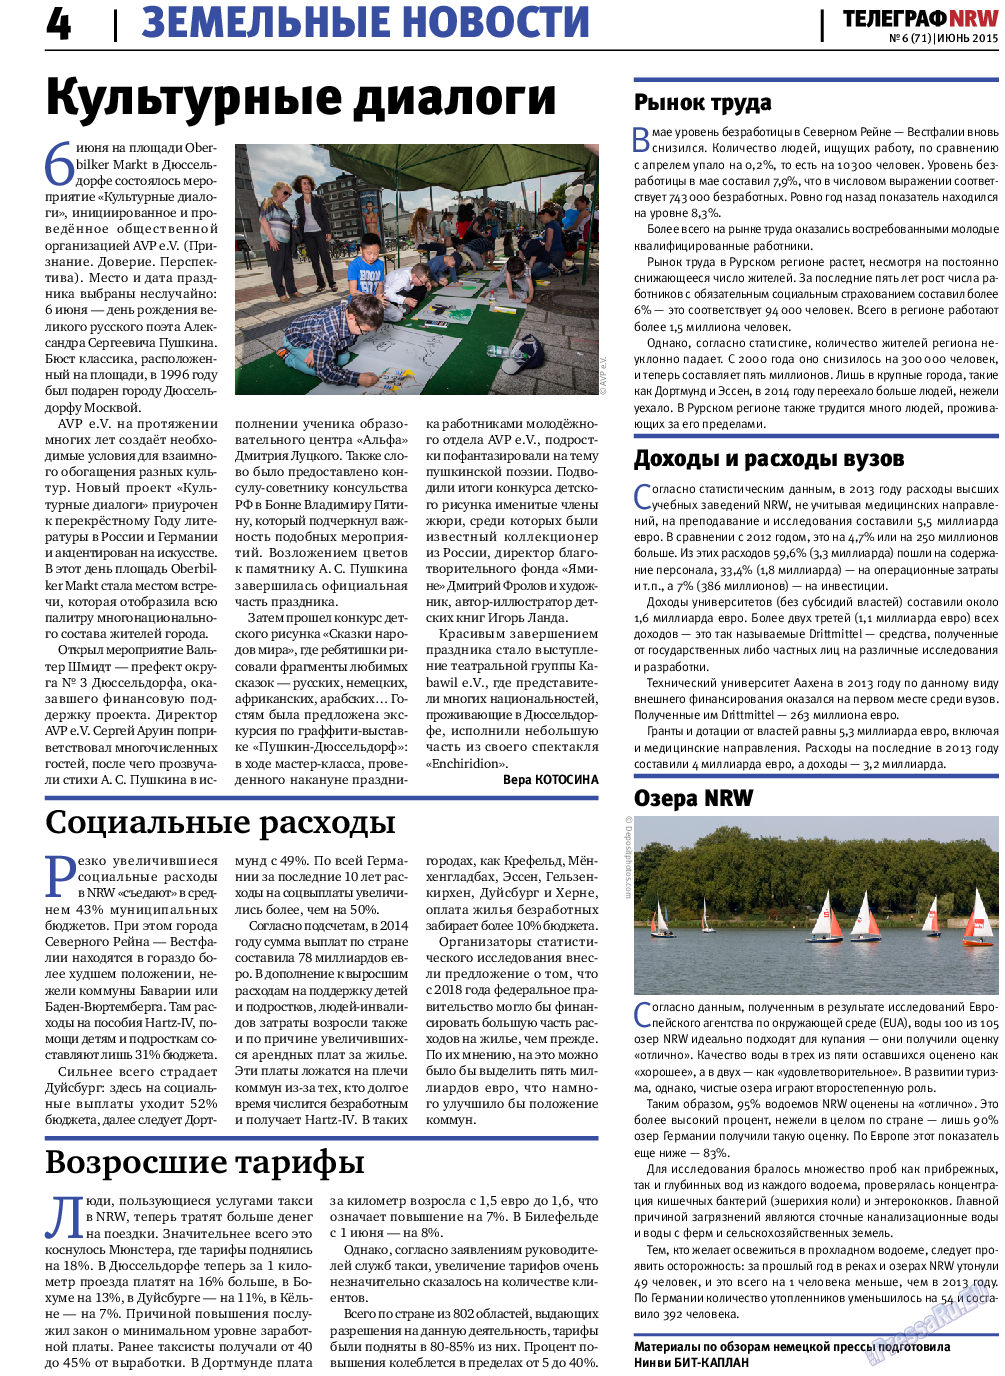 Телеграф NRW, газета. 2015 №6 стр.4